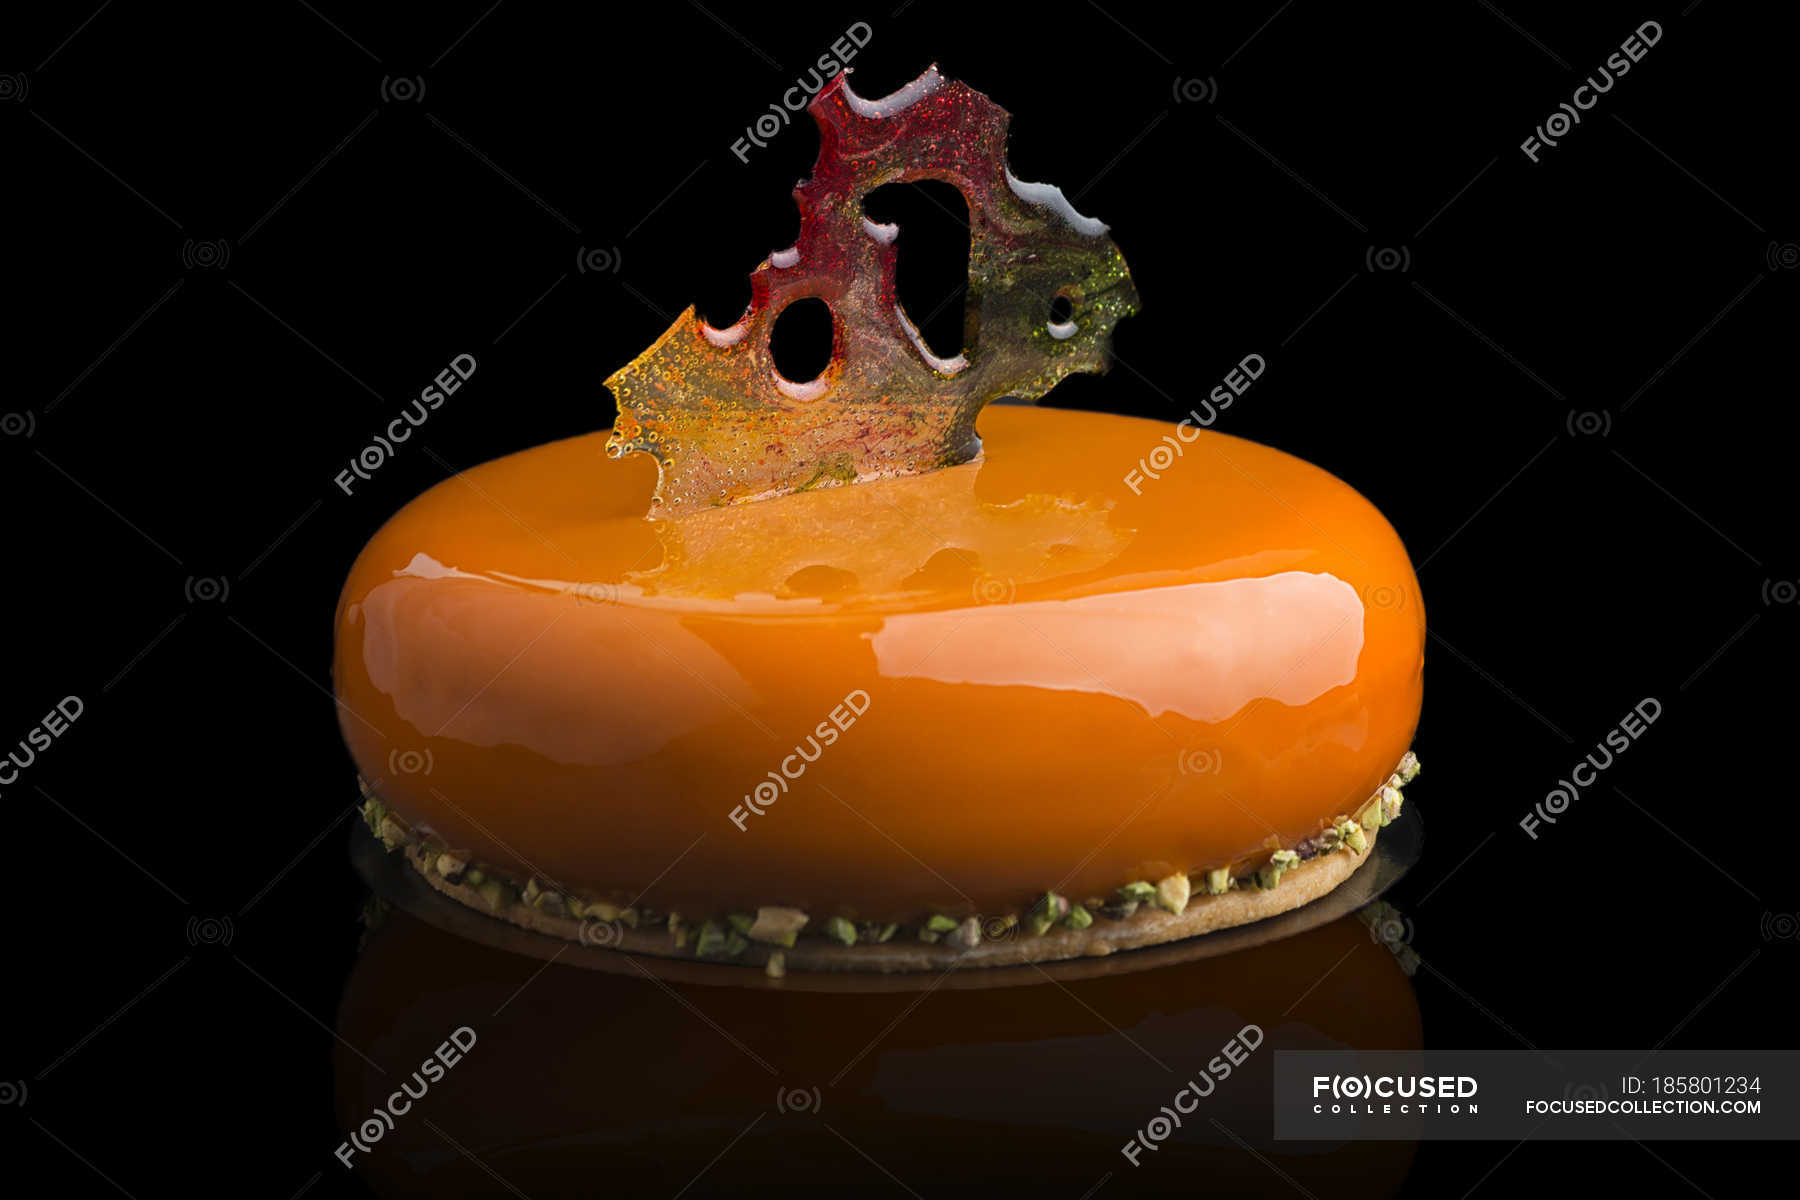 Blood Orange Loaf Cake - The Dachshund Mom